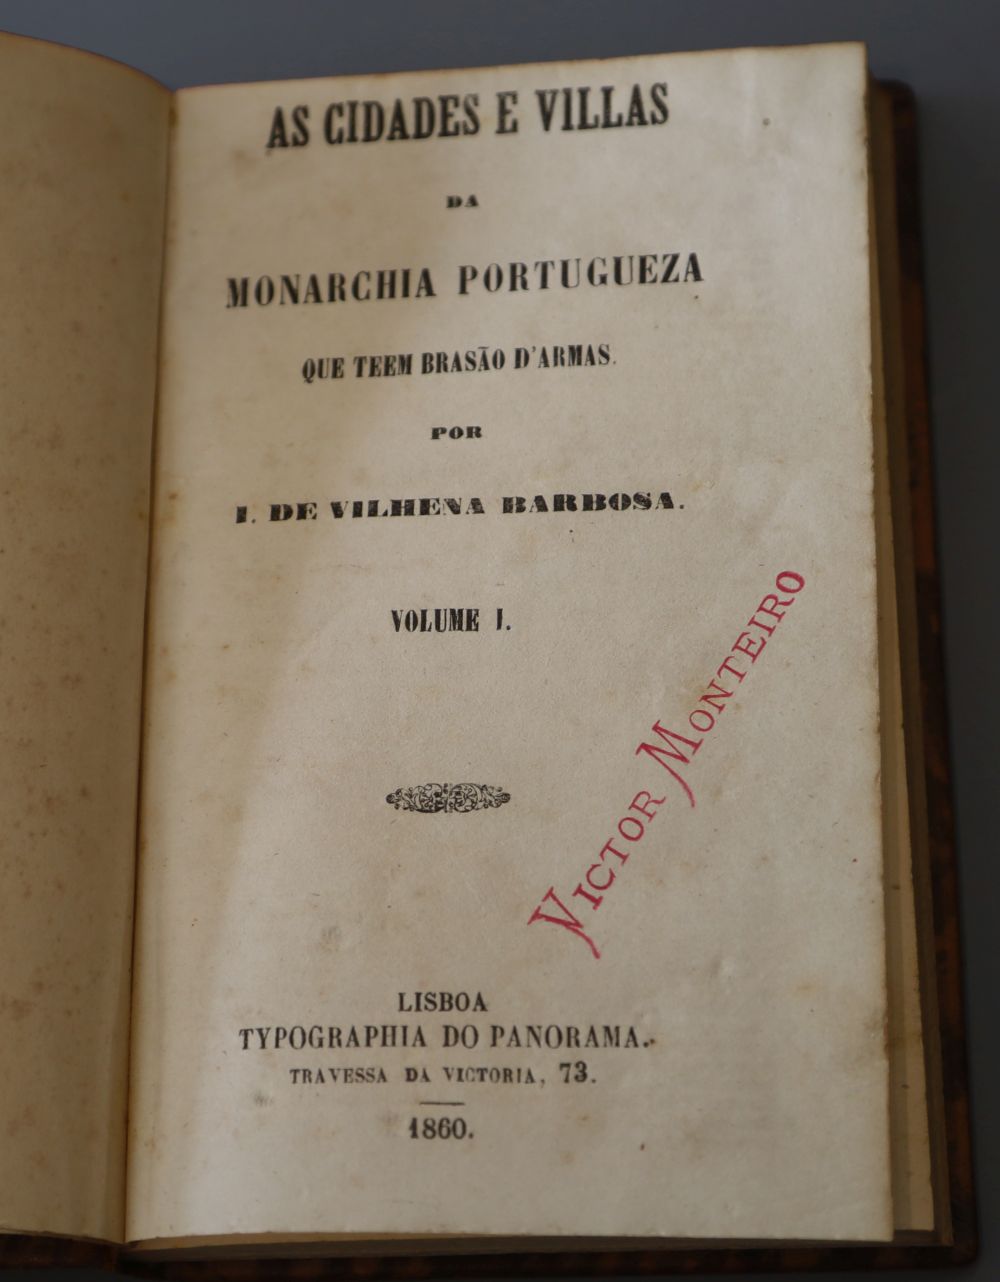 Vilhena Barbosa, Ignacio de, b. 1811. - As Cidades e villas ..., 3 vols, calf, 8vo, Typographia do Panorama, Lisbon, 1860